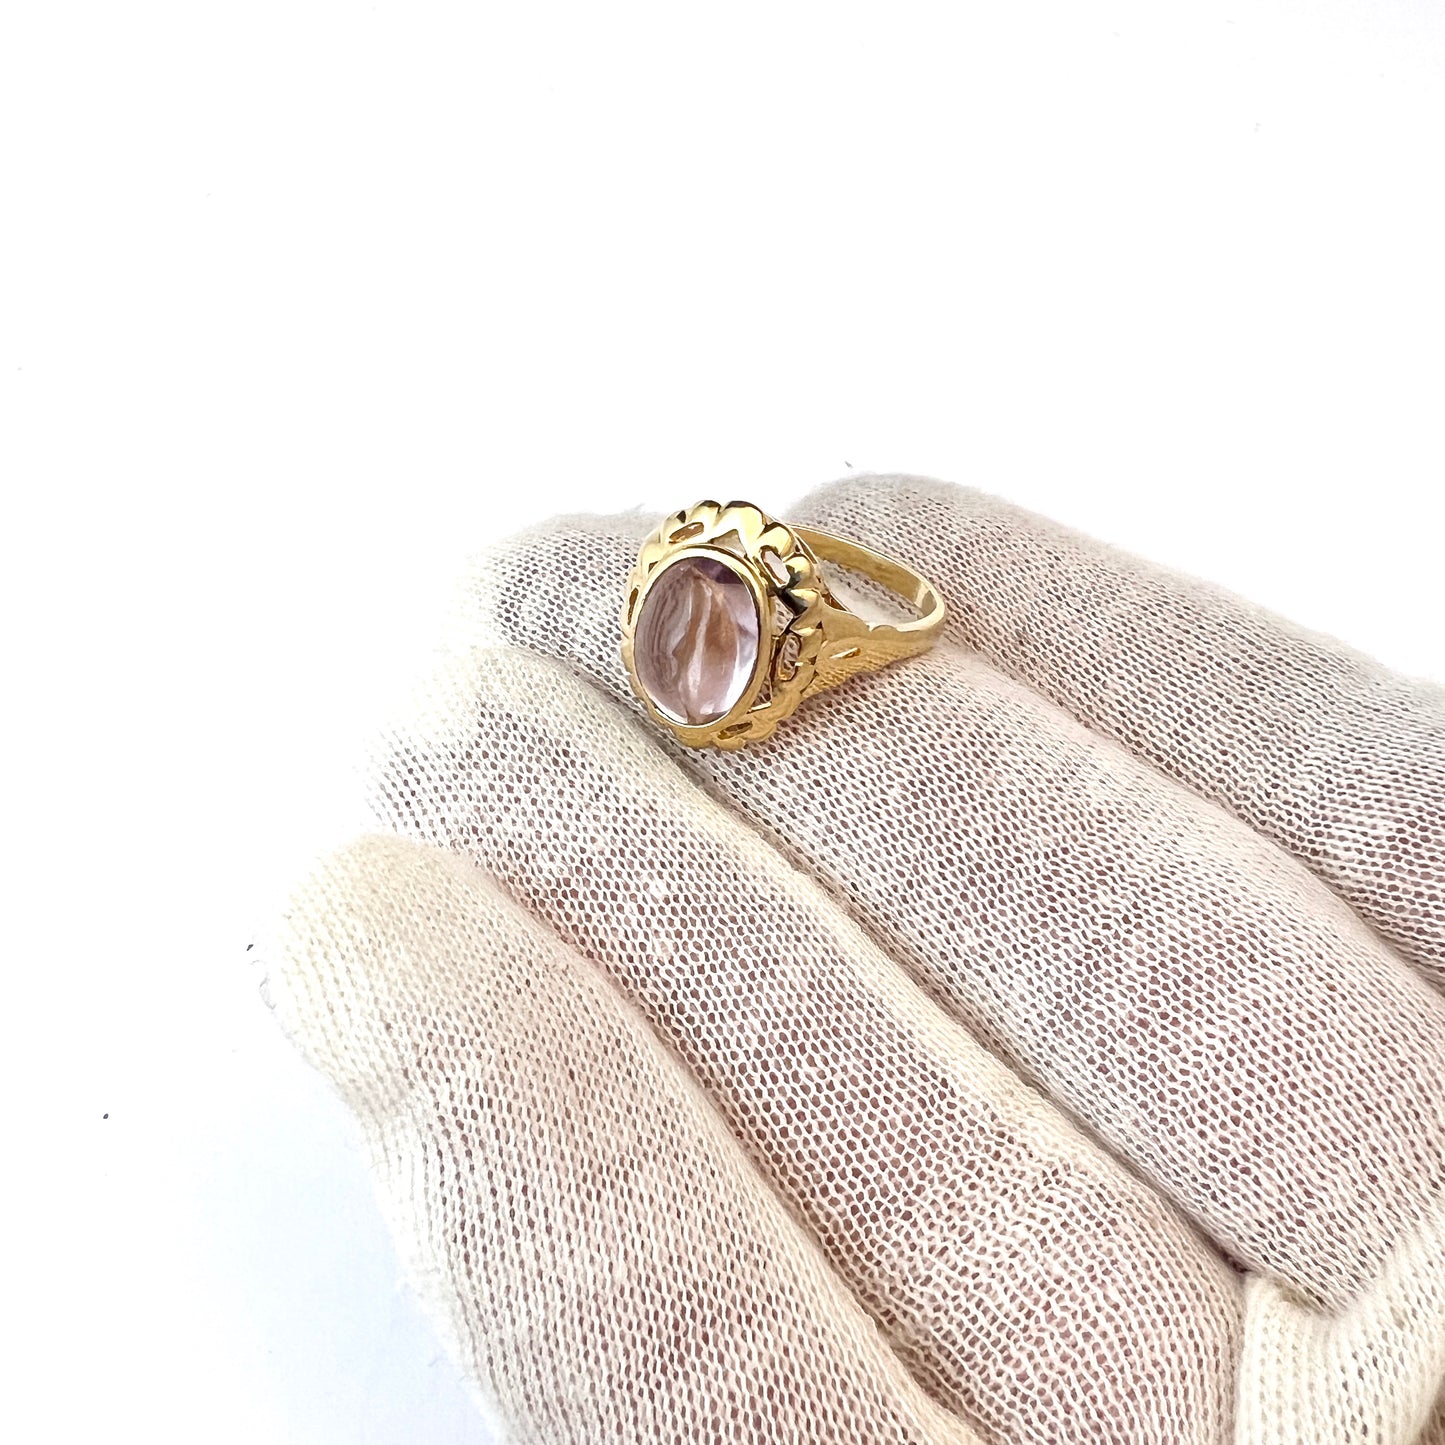 Ahlberg & Berghman, Sweden 1951. Vintage 18k Gold Pale Amethyst Ring.